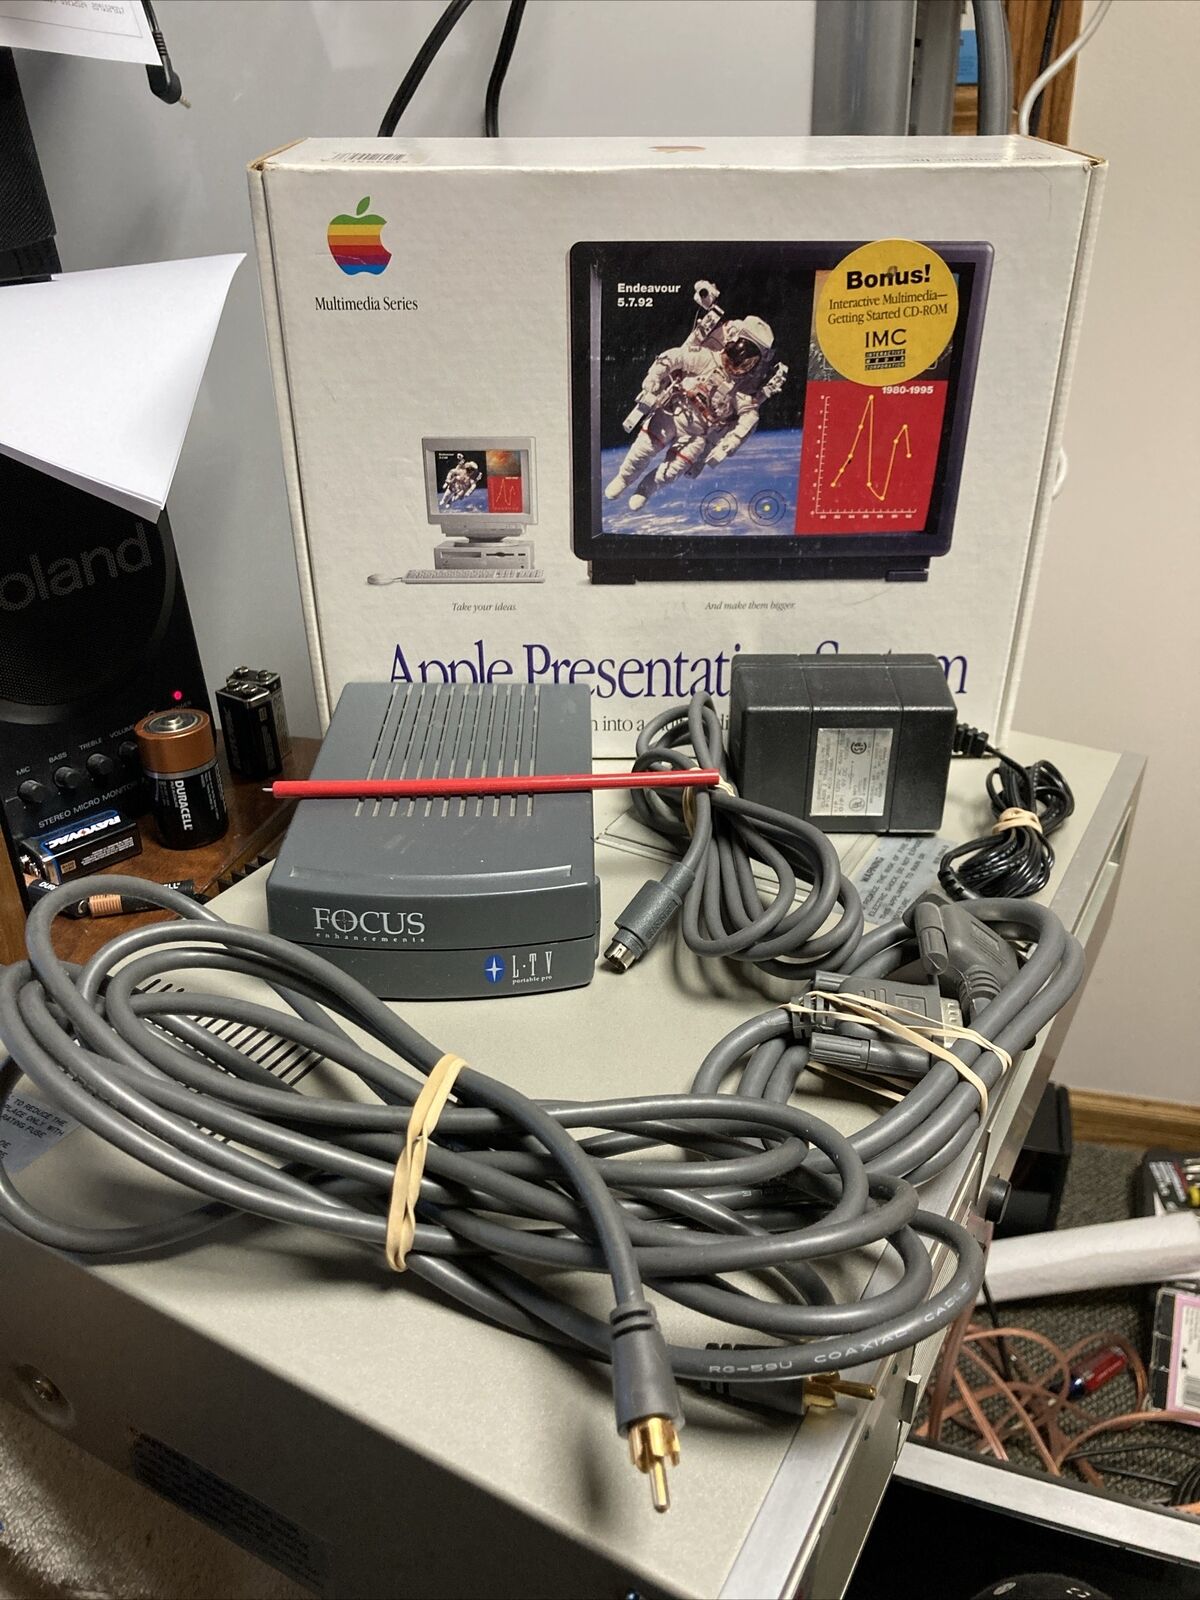 Vtg 1994 Macintosh Apple (M2895LL/A) Presentation System - All Parts/Cables Inc